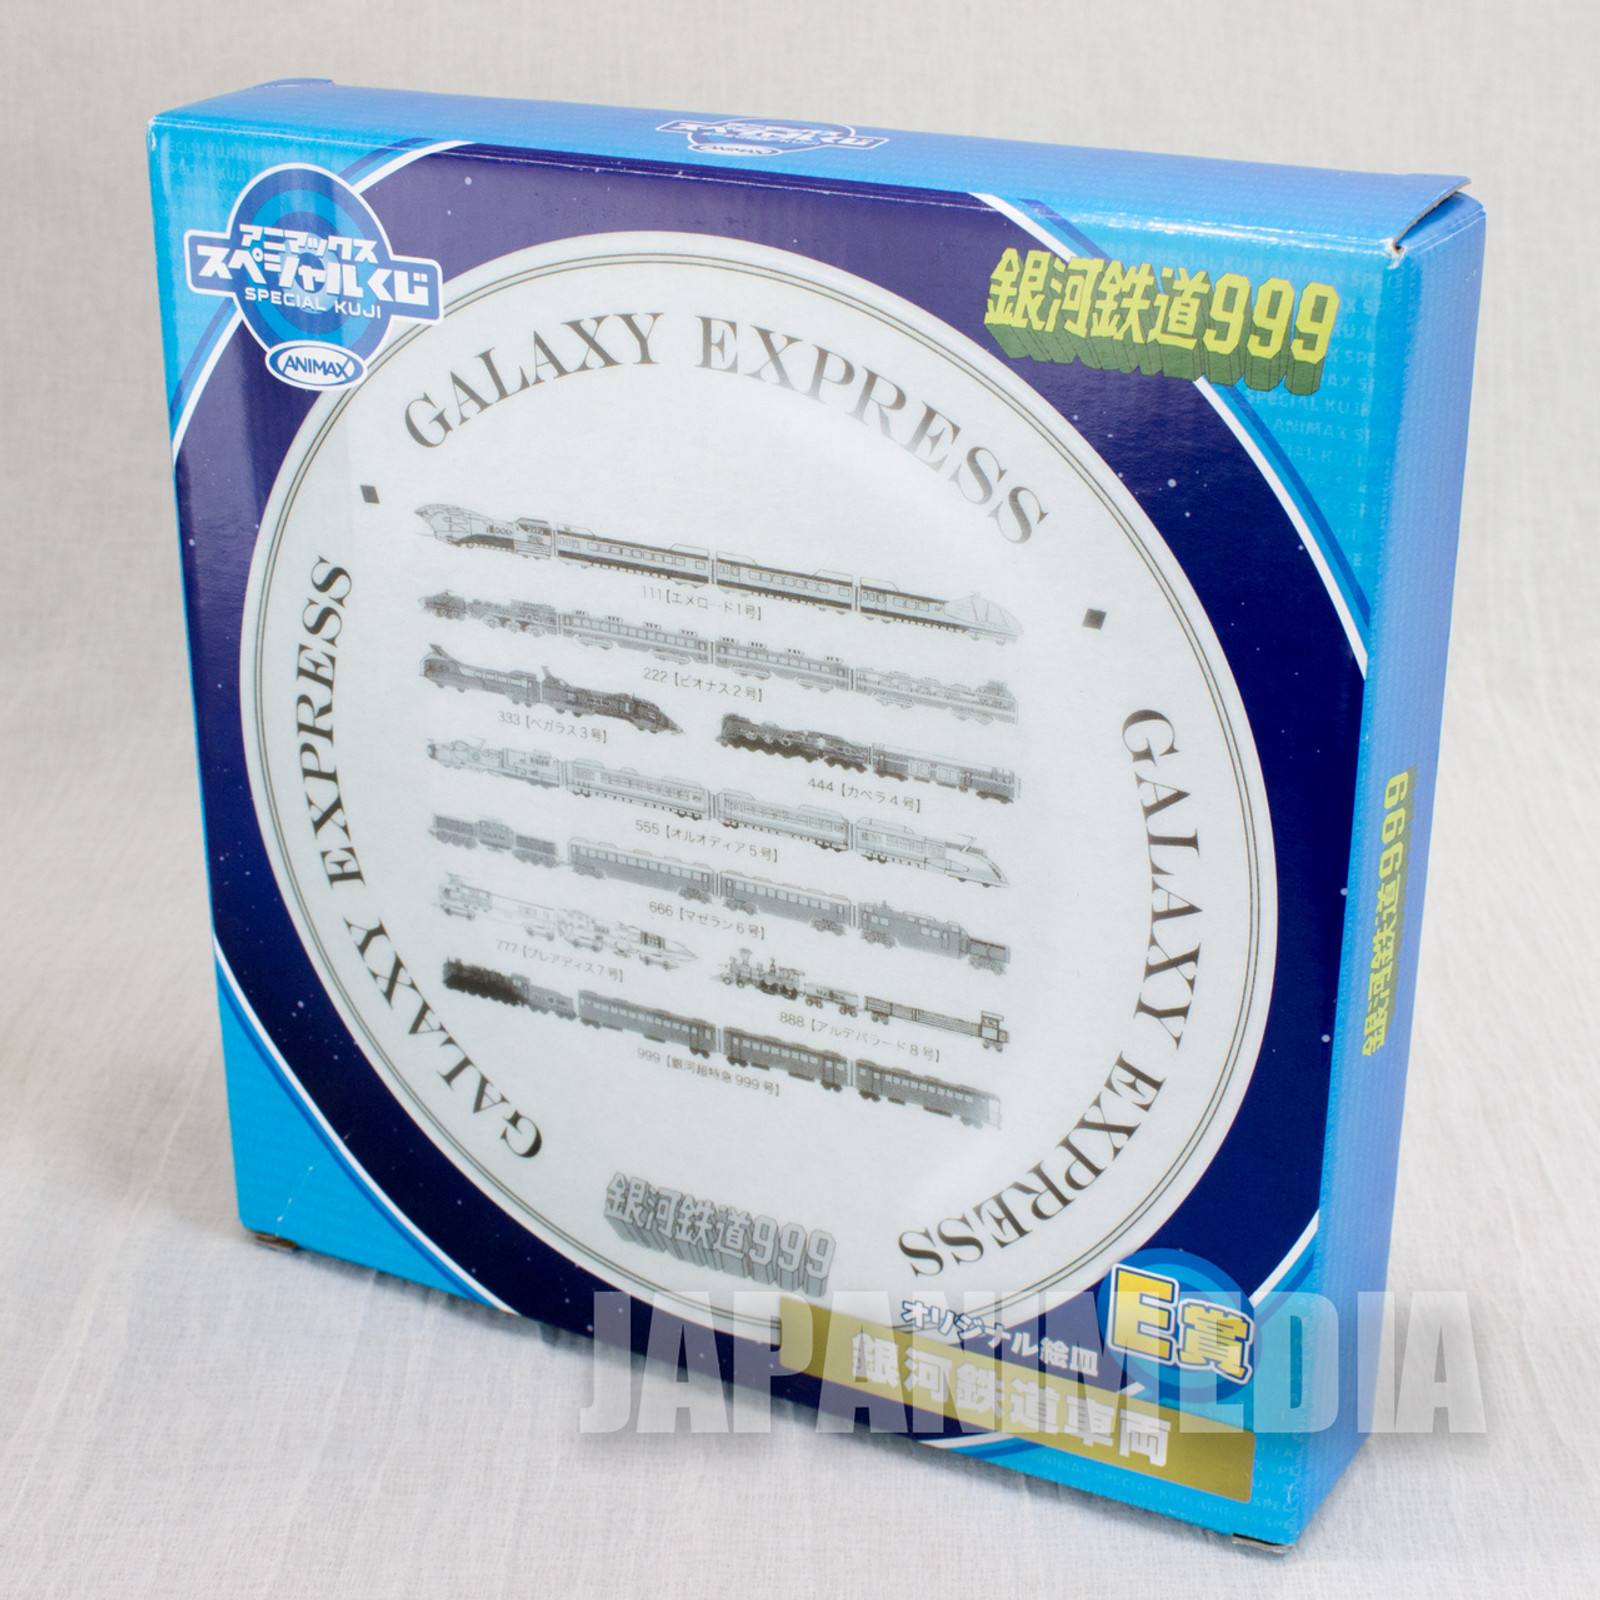 RARE!! Galaxy Express 999 Plate Dish Animax JAPAN ANIME